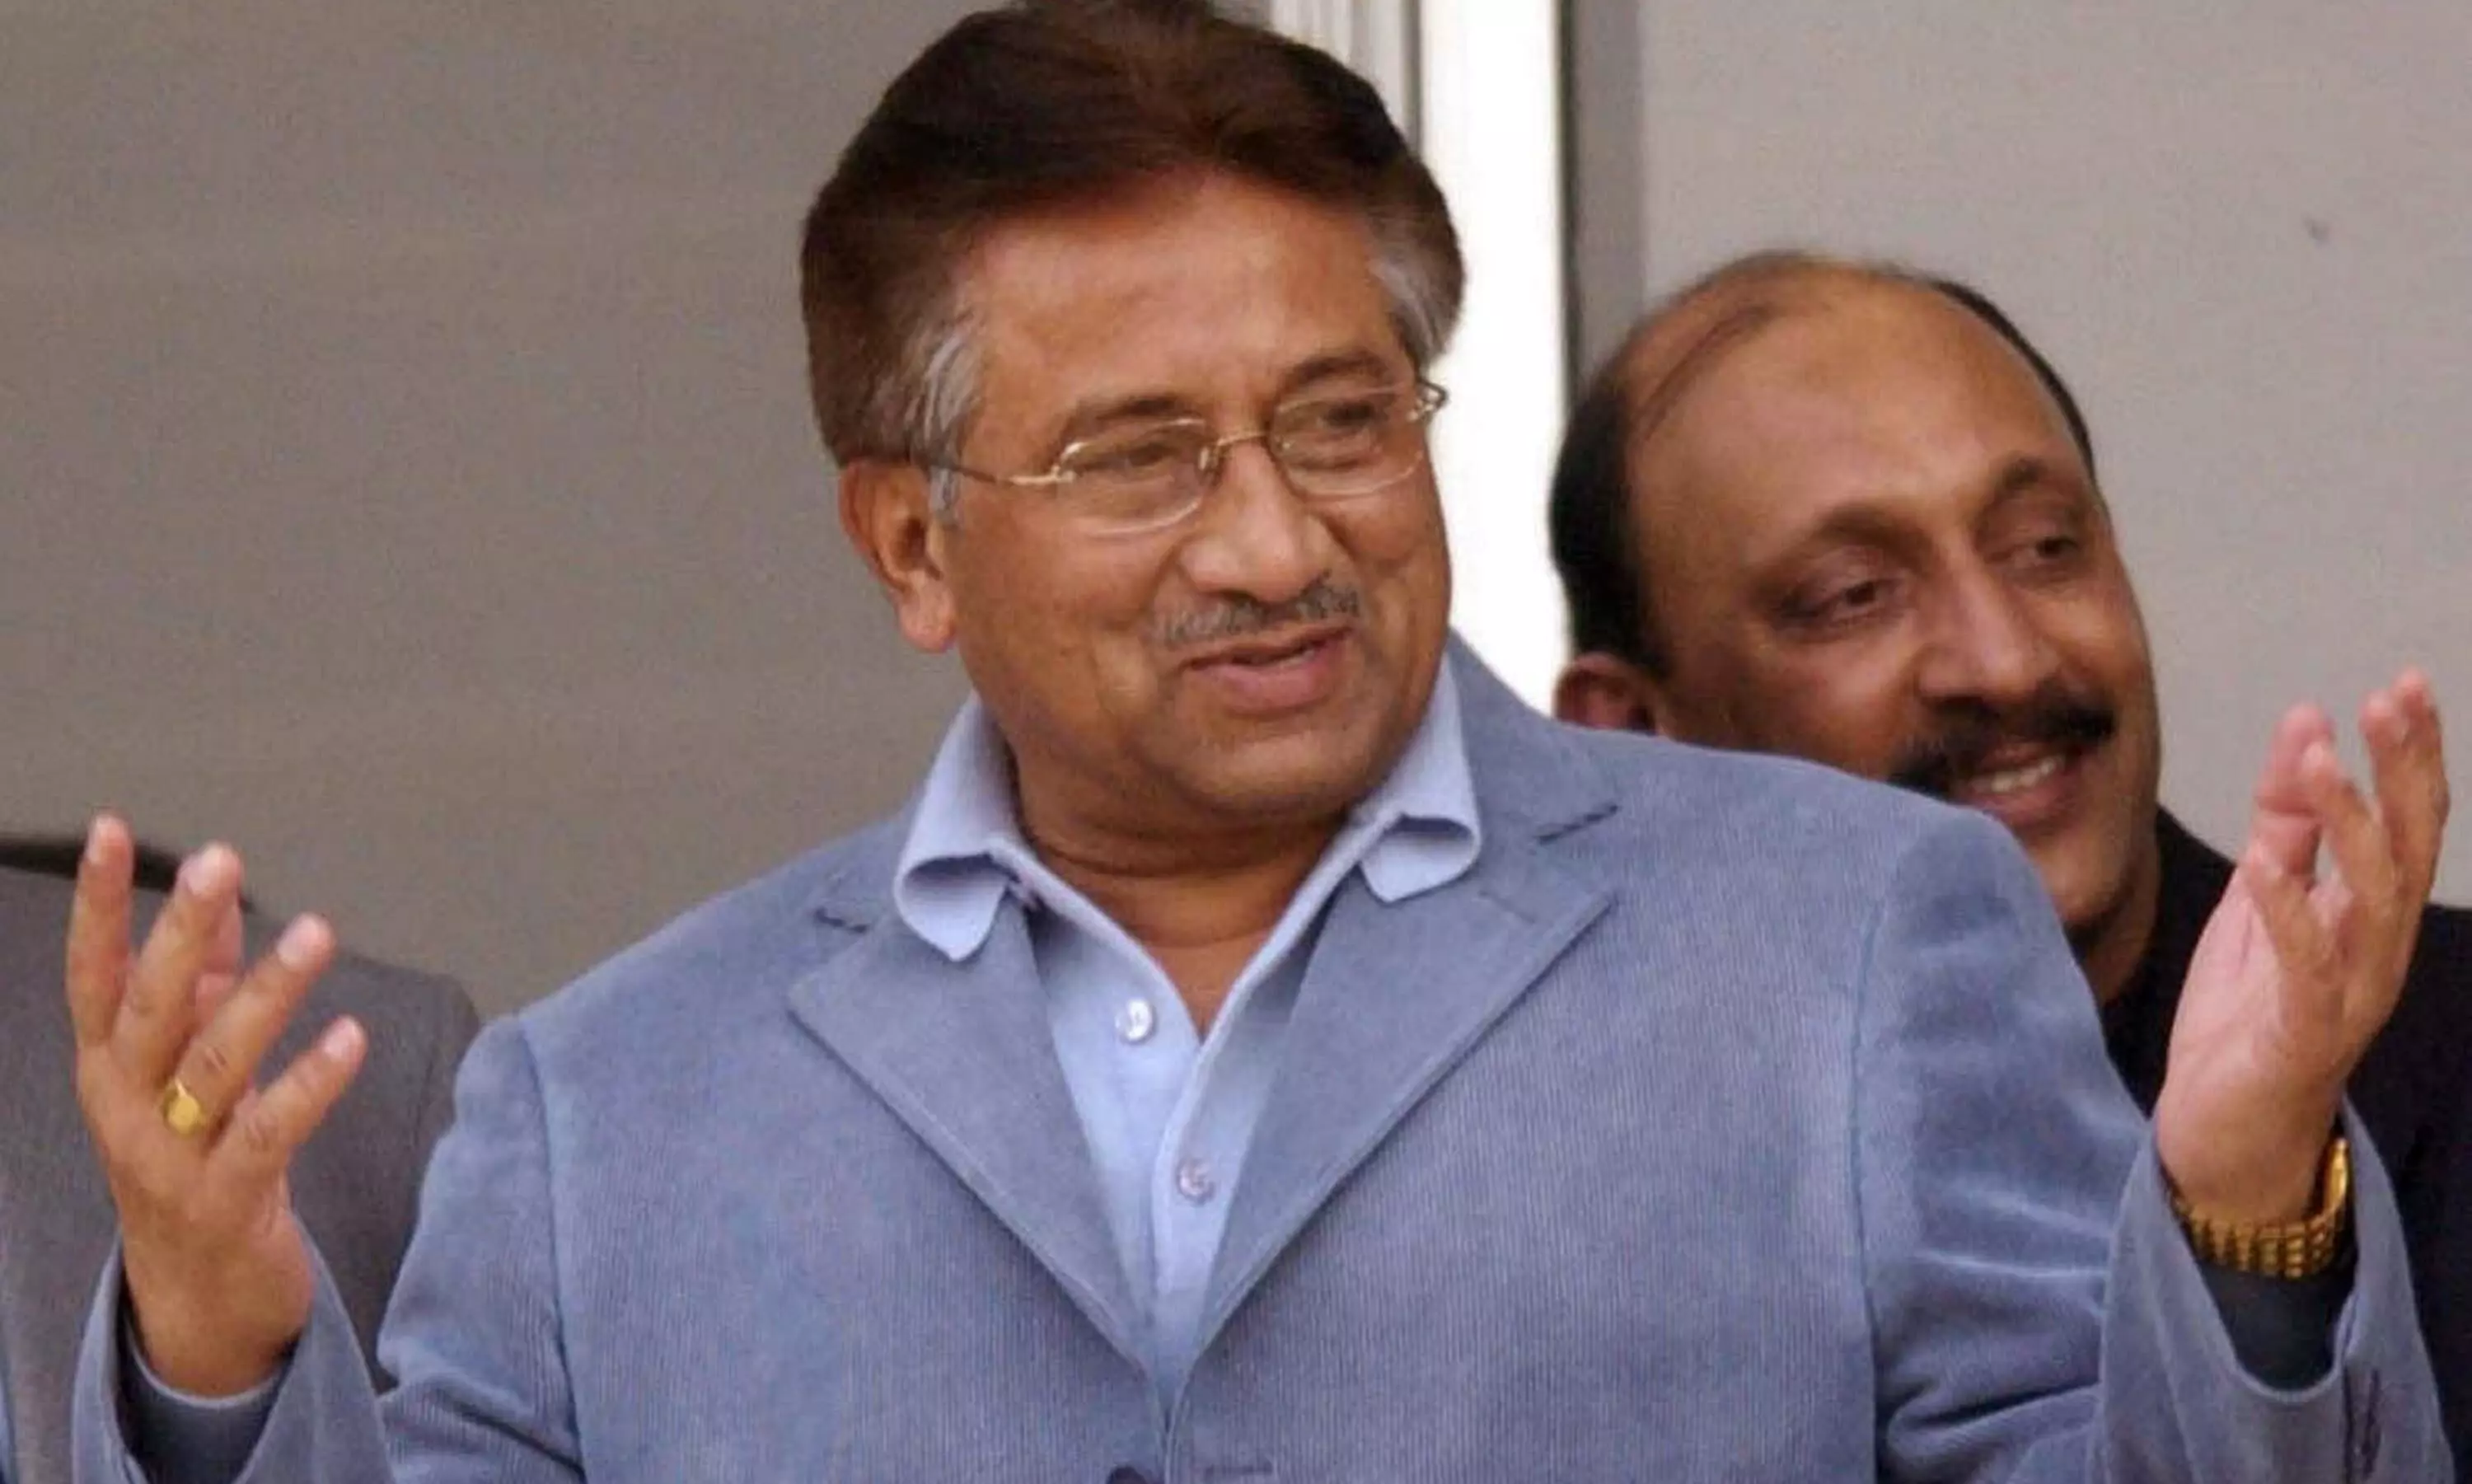 Pakistan’s former president Pervez Musharraf passes away at 79